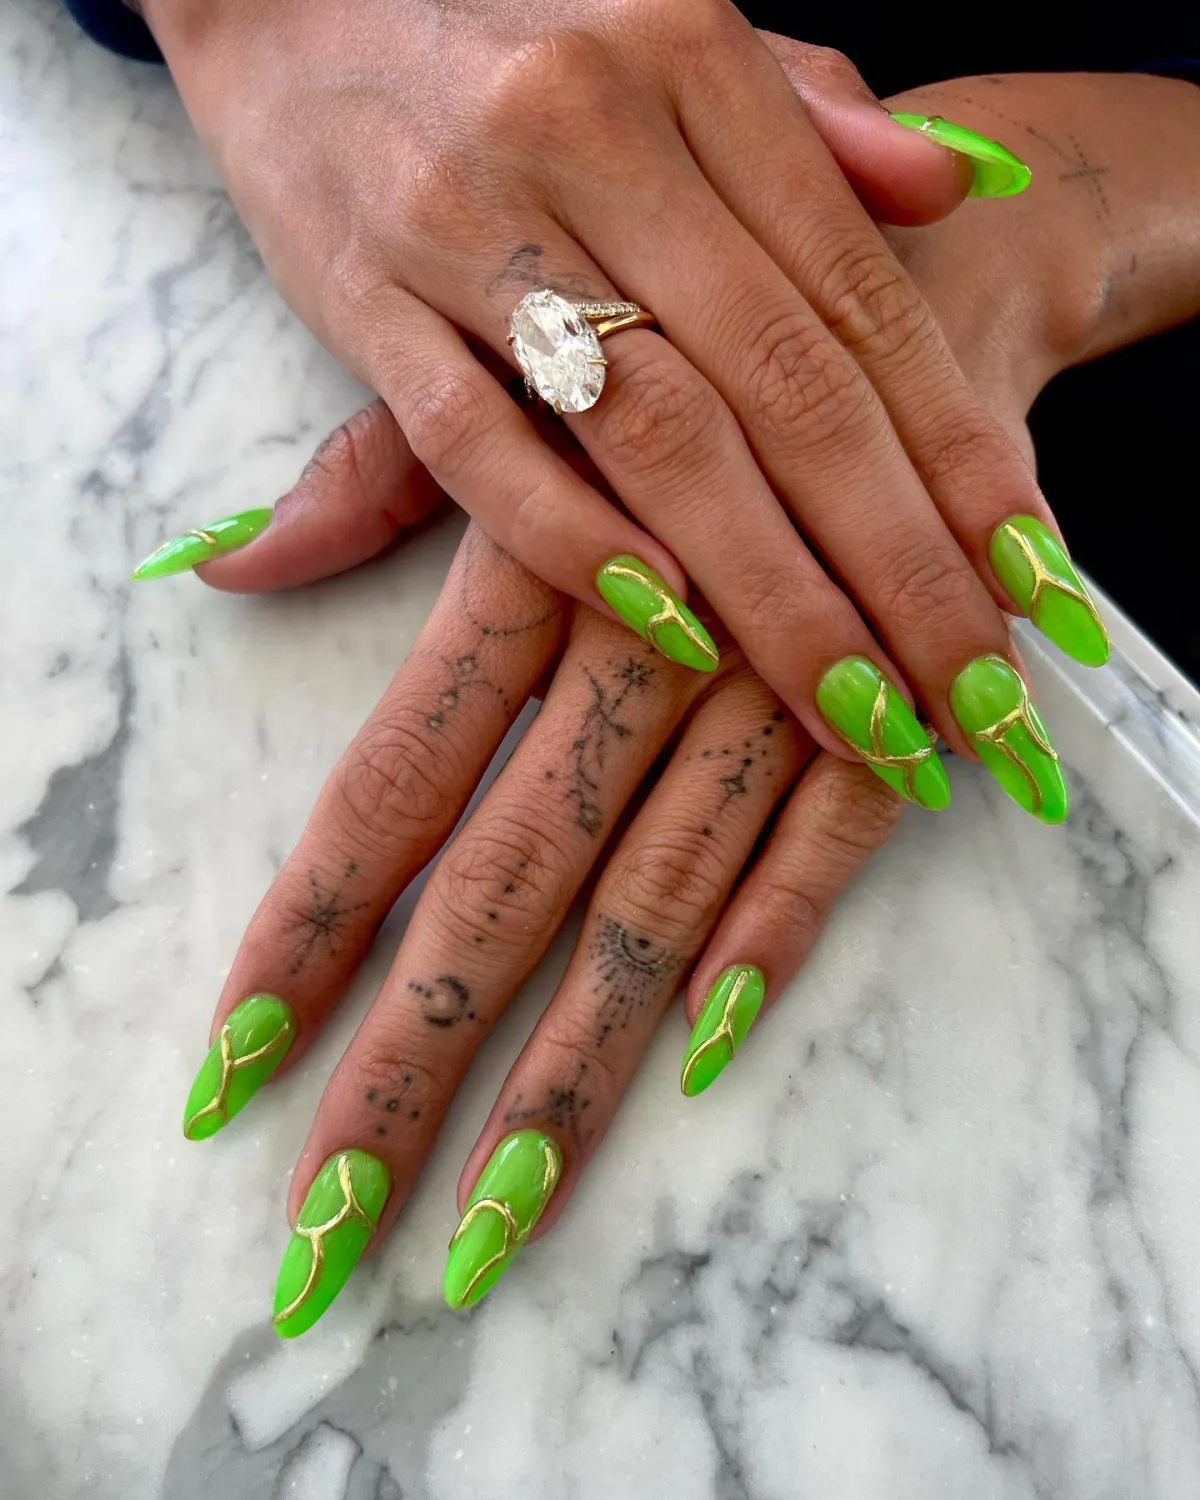 hailey bieber ongles longs vernis neon vert bague tatouage doigts femme